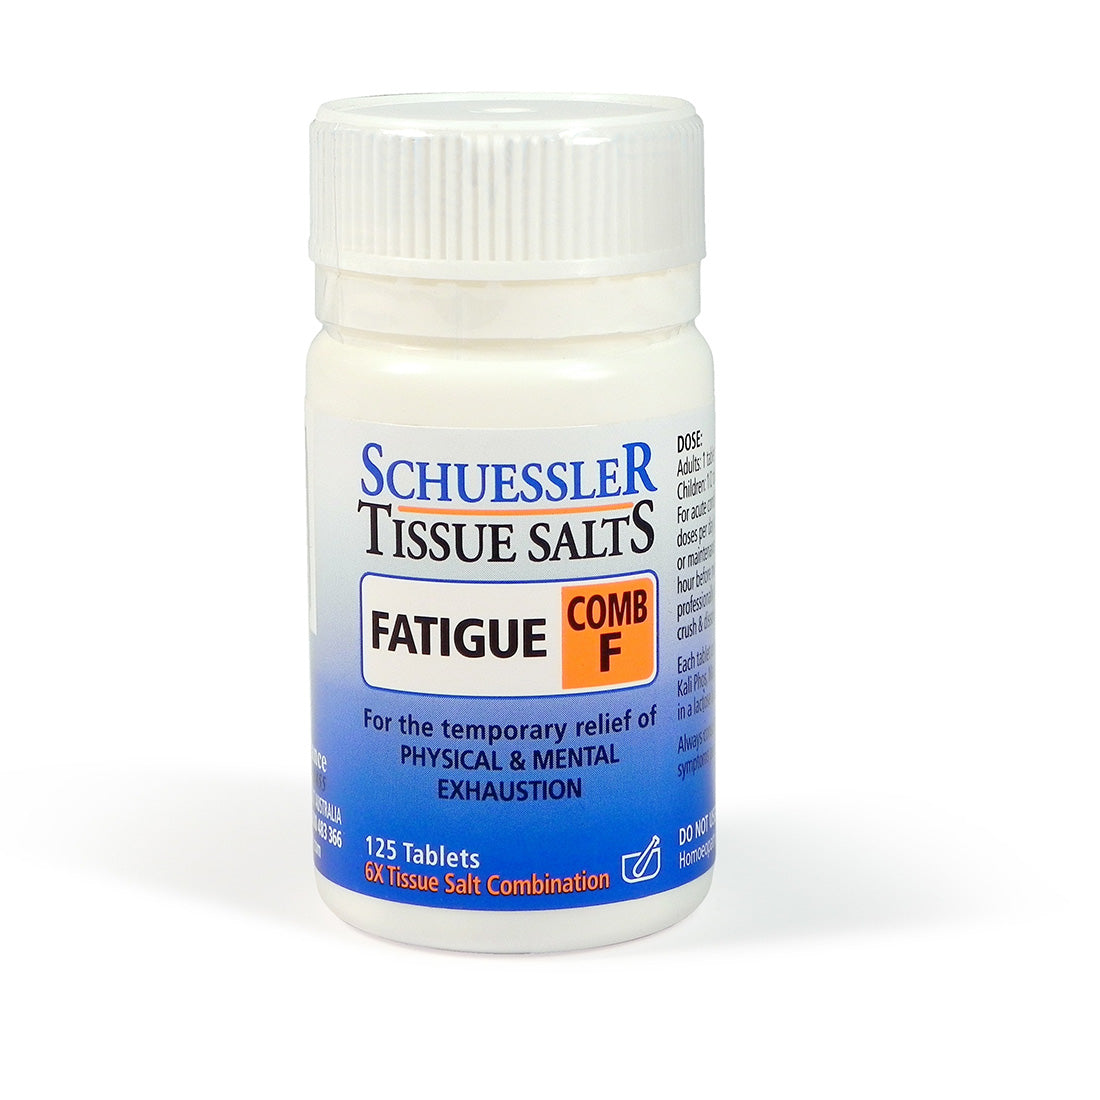 Martin & Pleasance Schuessler Tissue Salts Comb F 125 Tablets, Fatigue